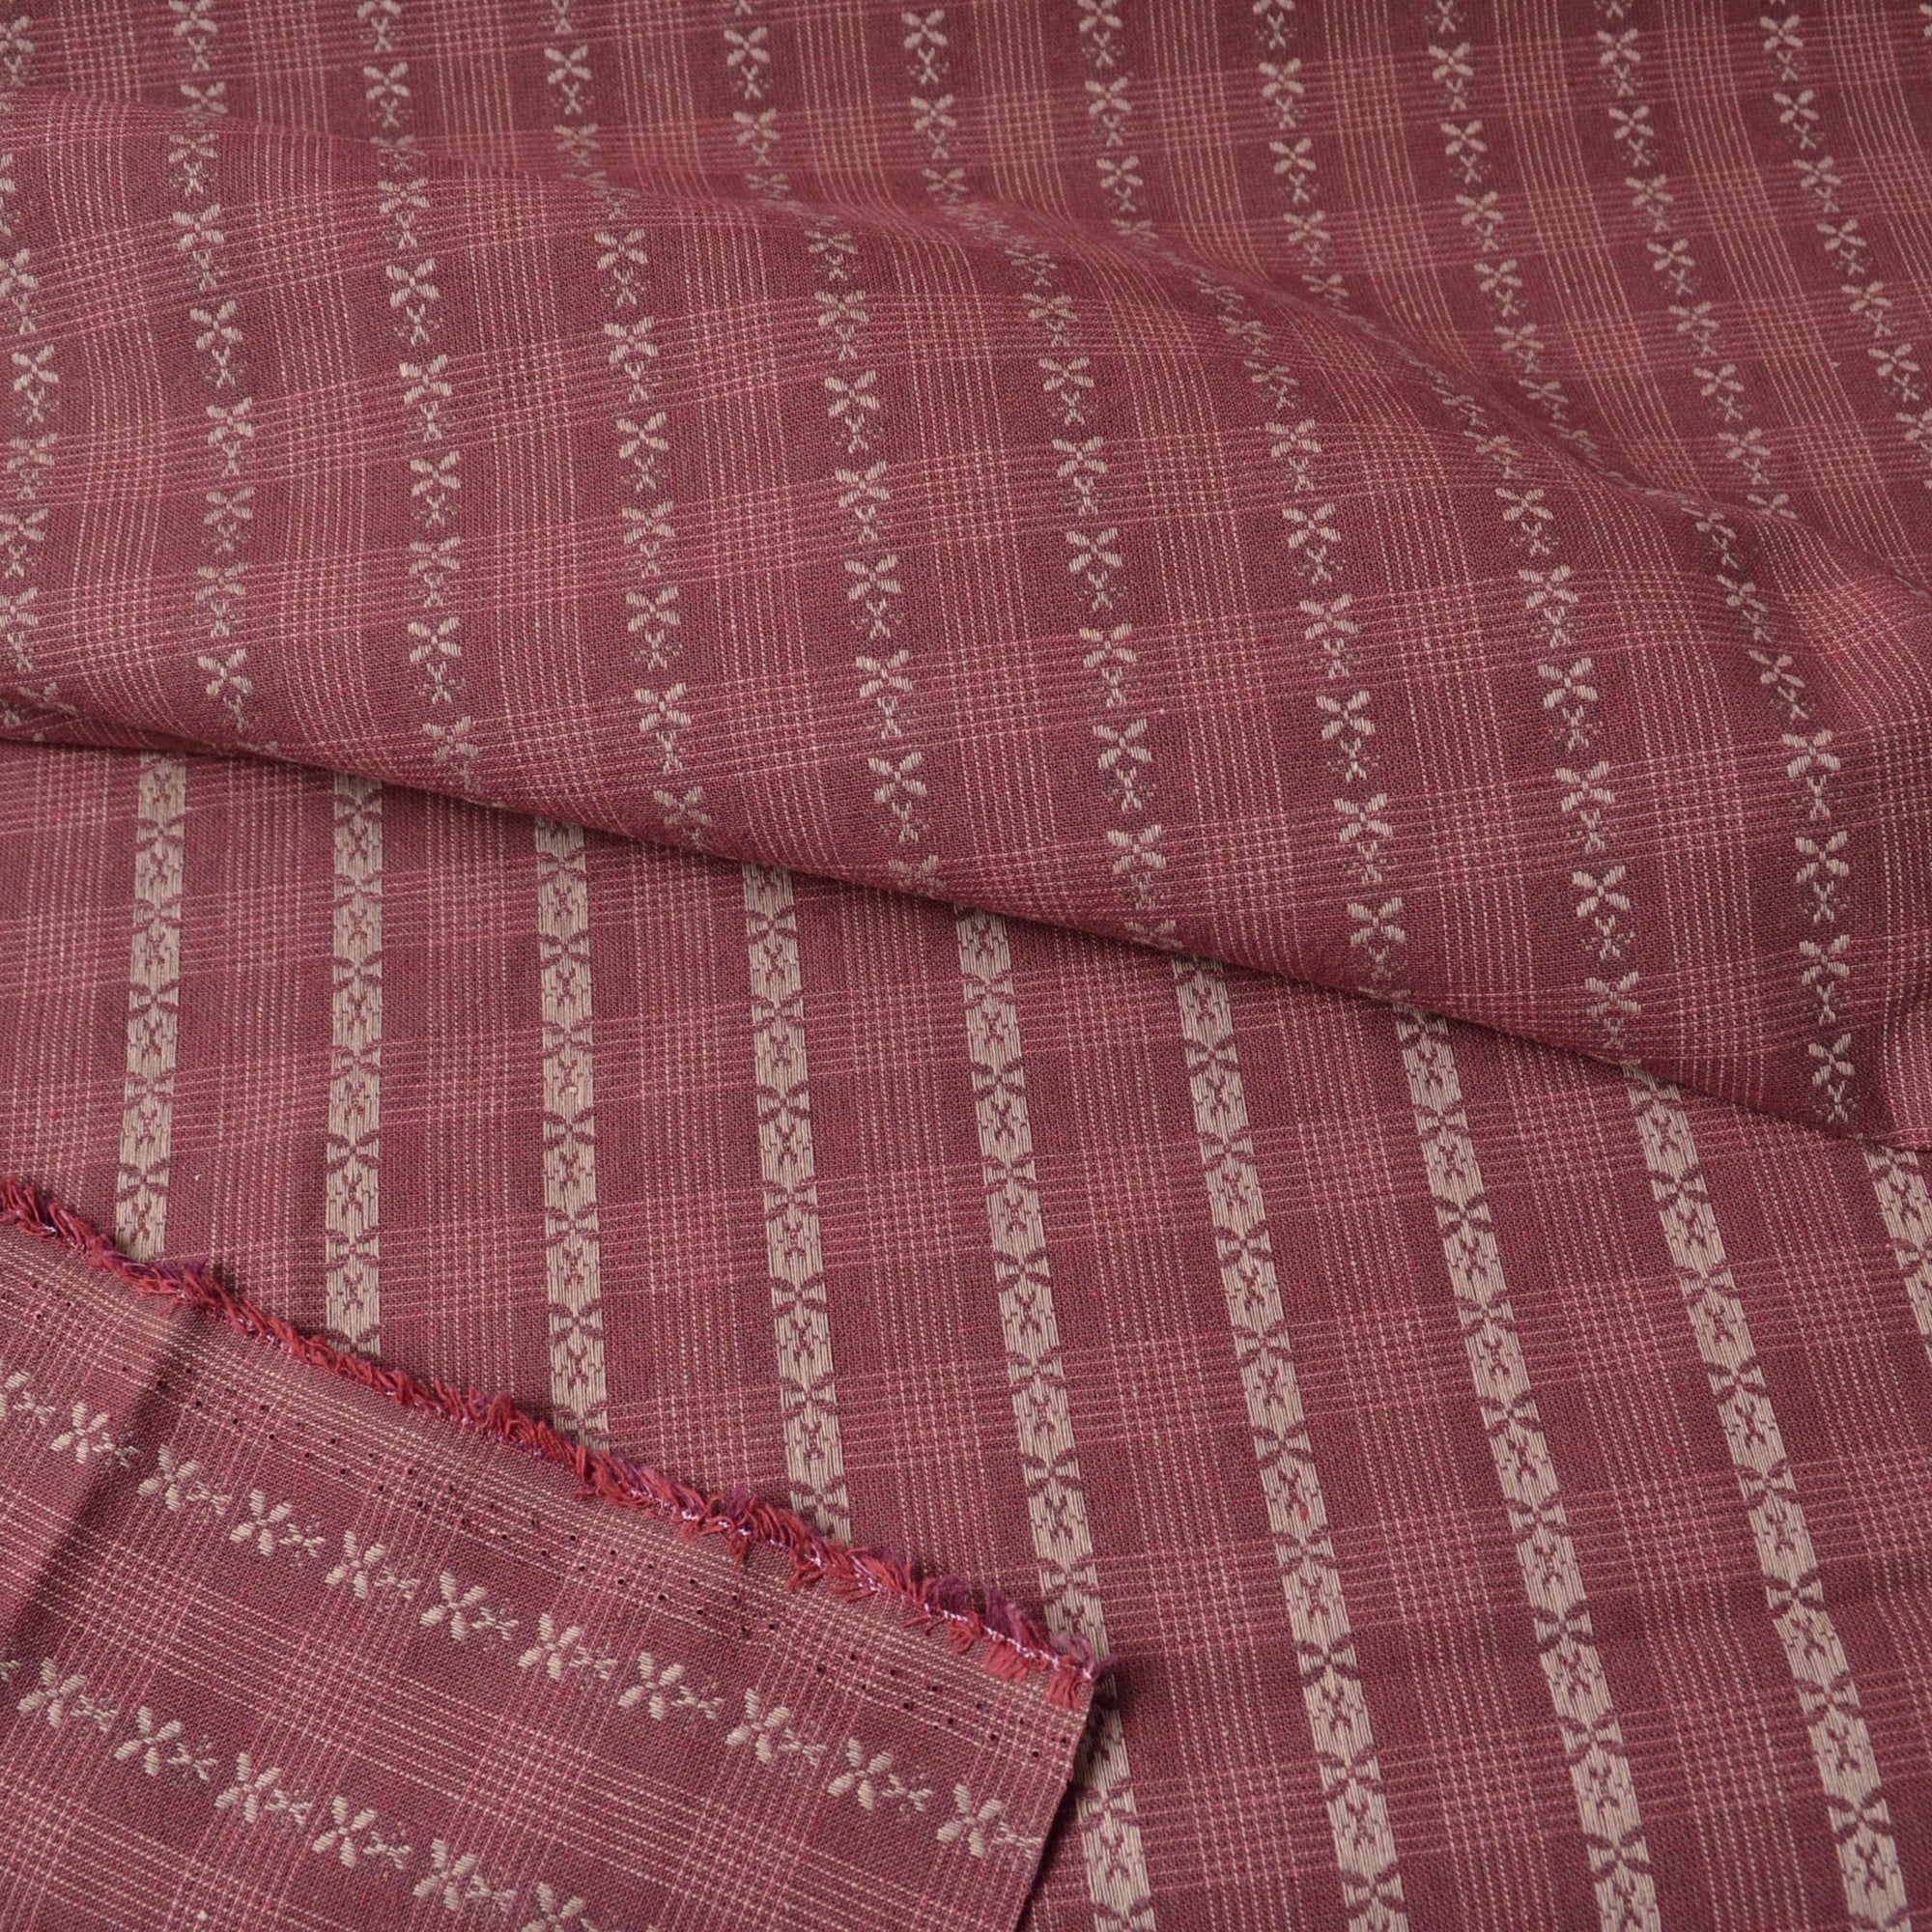 Yarn dyed sewing fabric